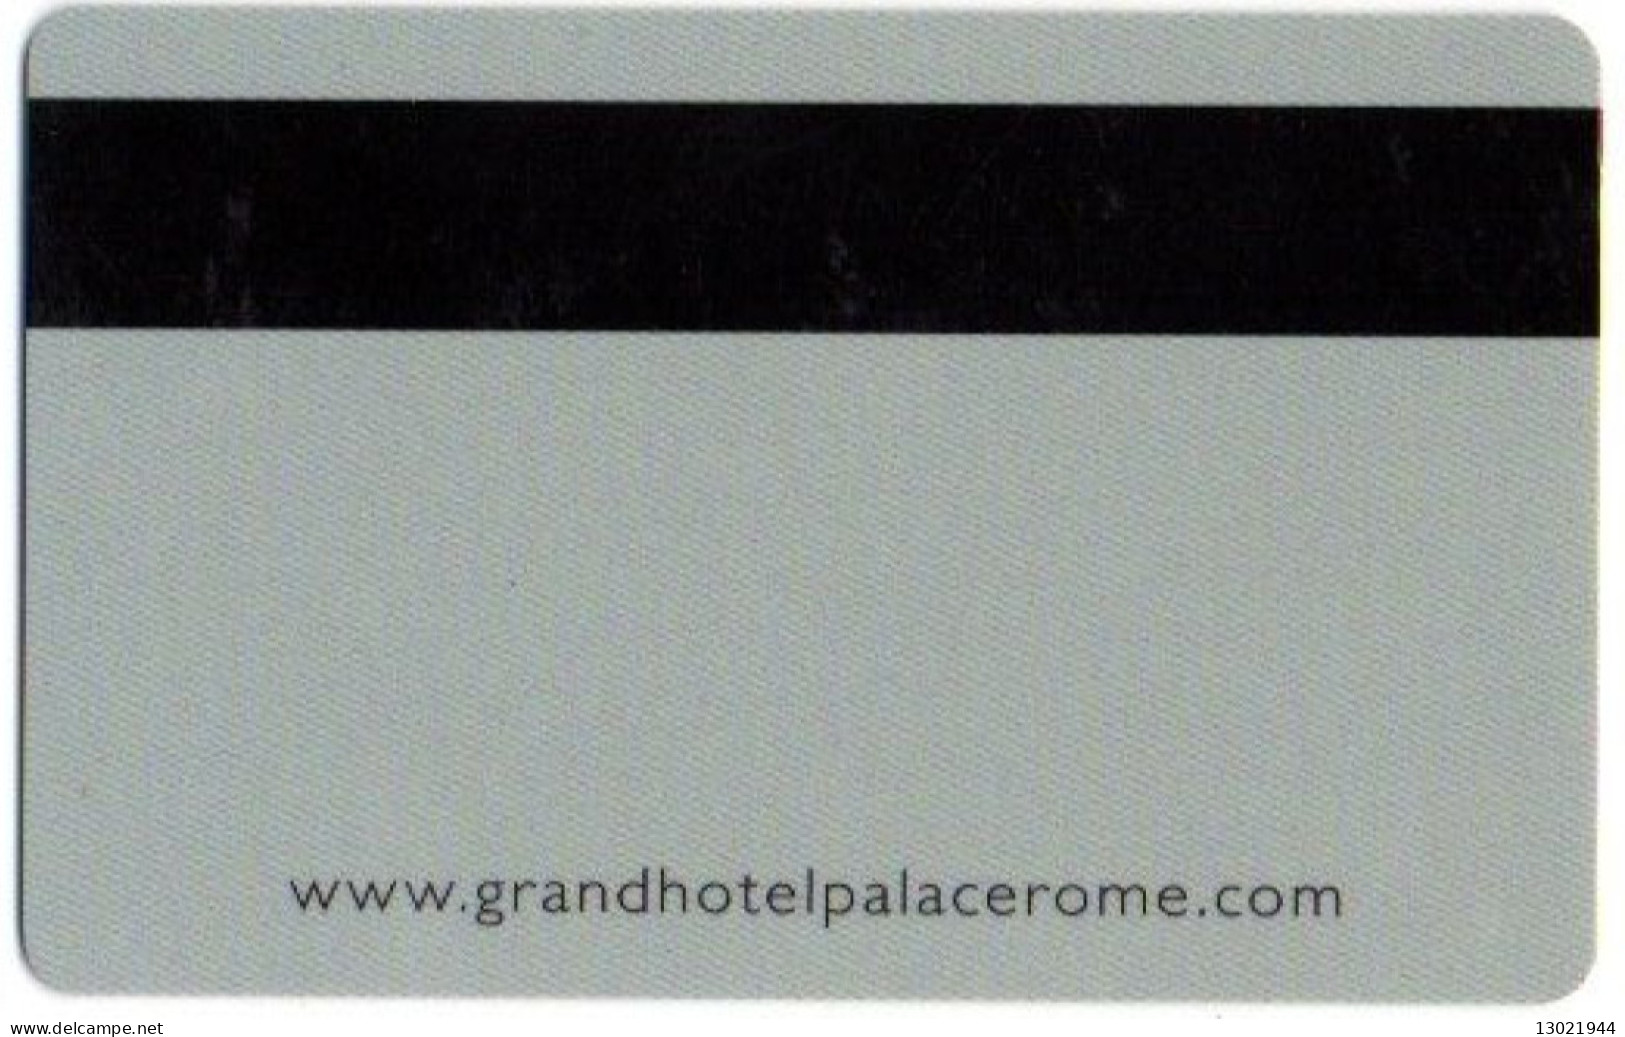 ITALIA  KEY HOTEL   Grand Hotel Palace Rome - Cartas De Hotels